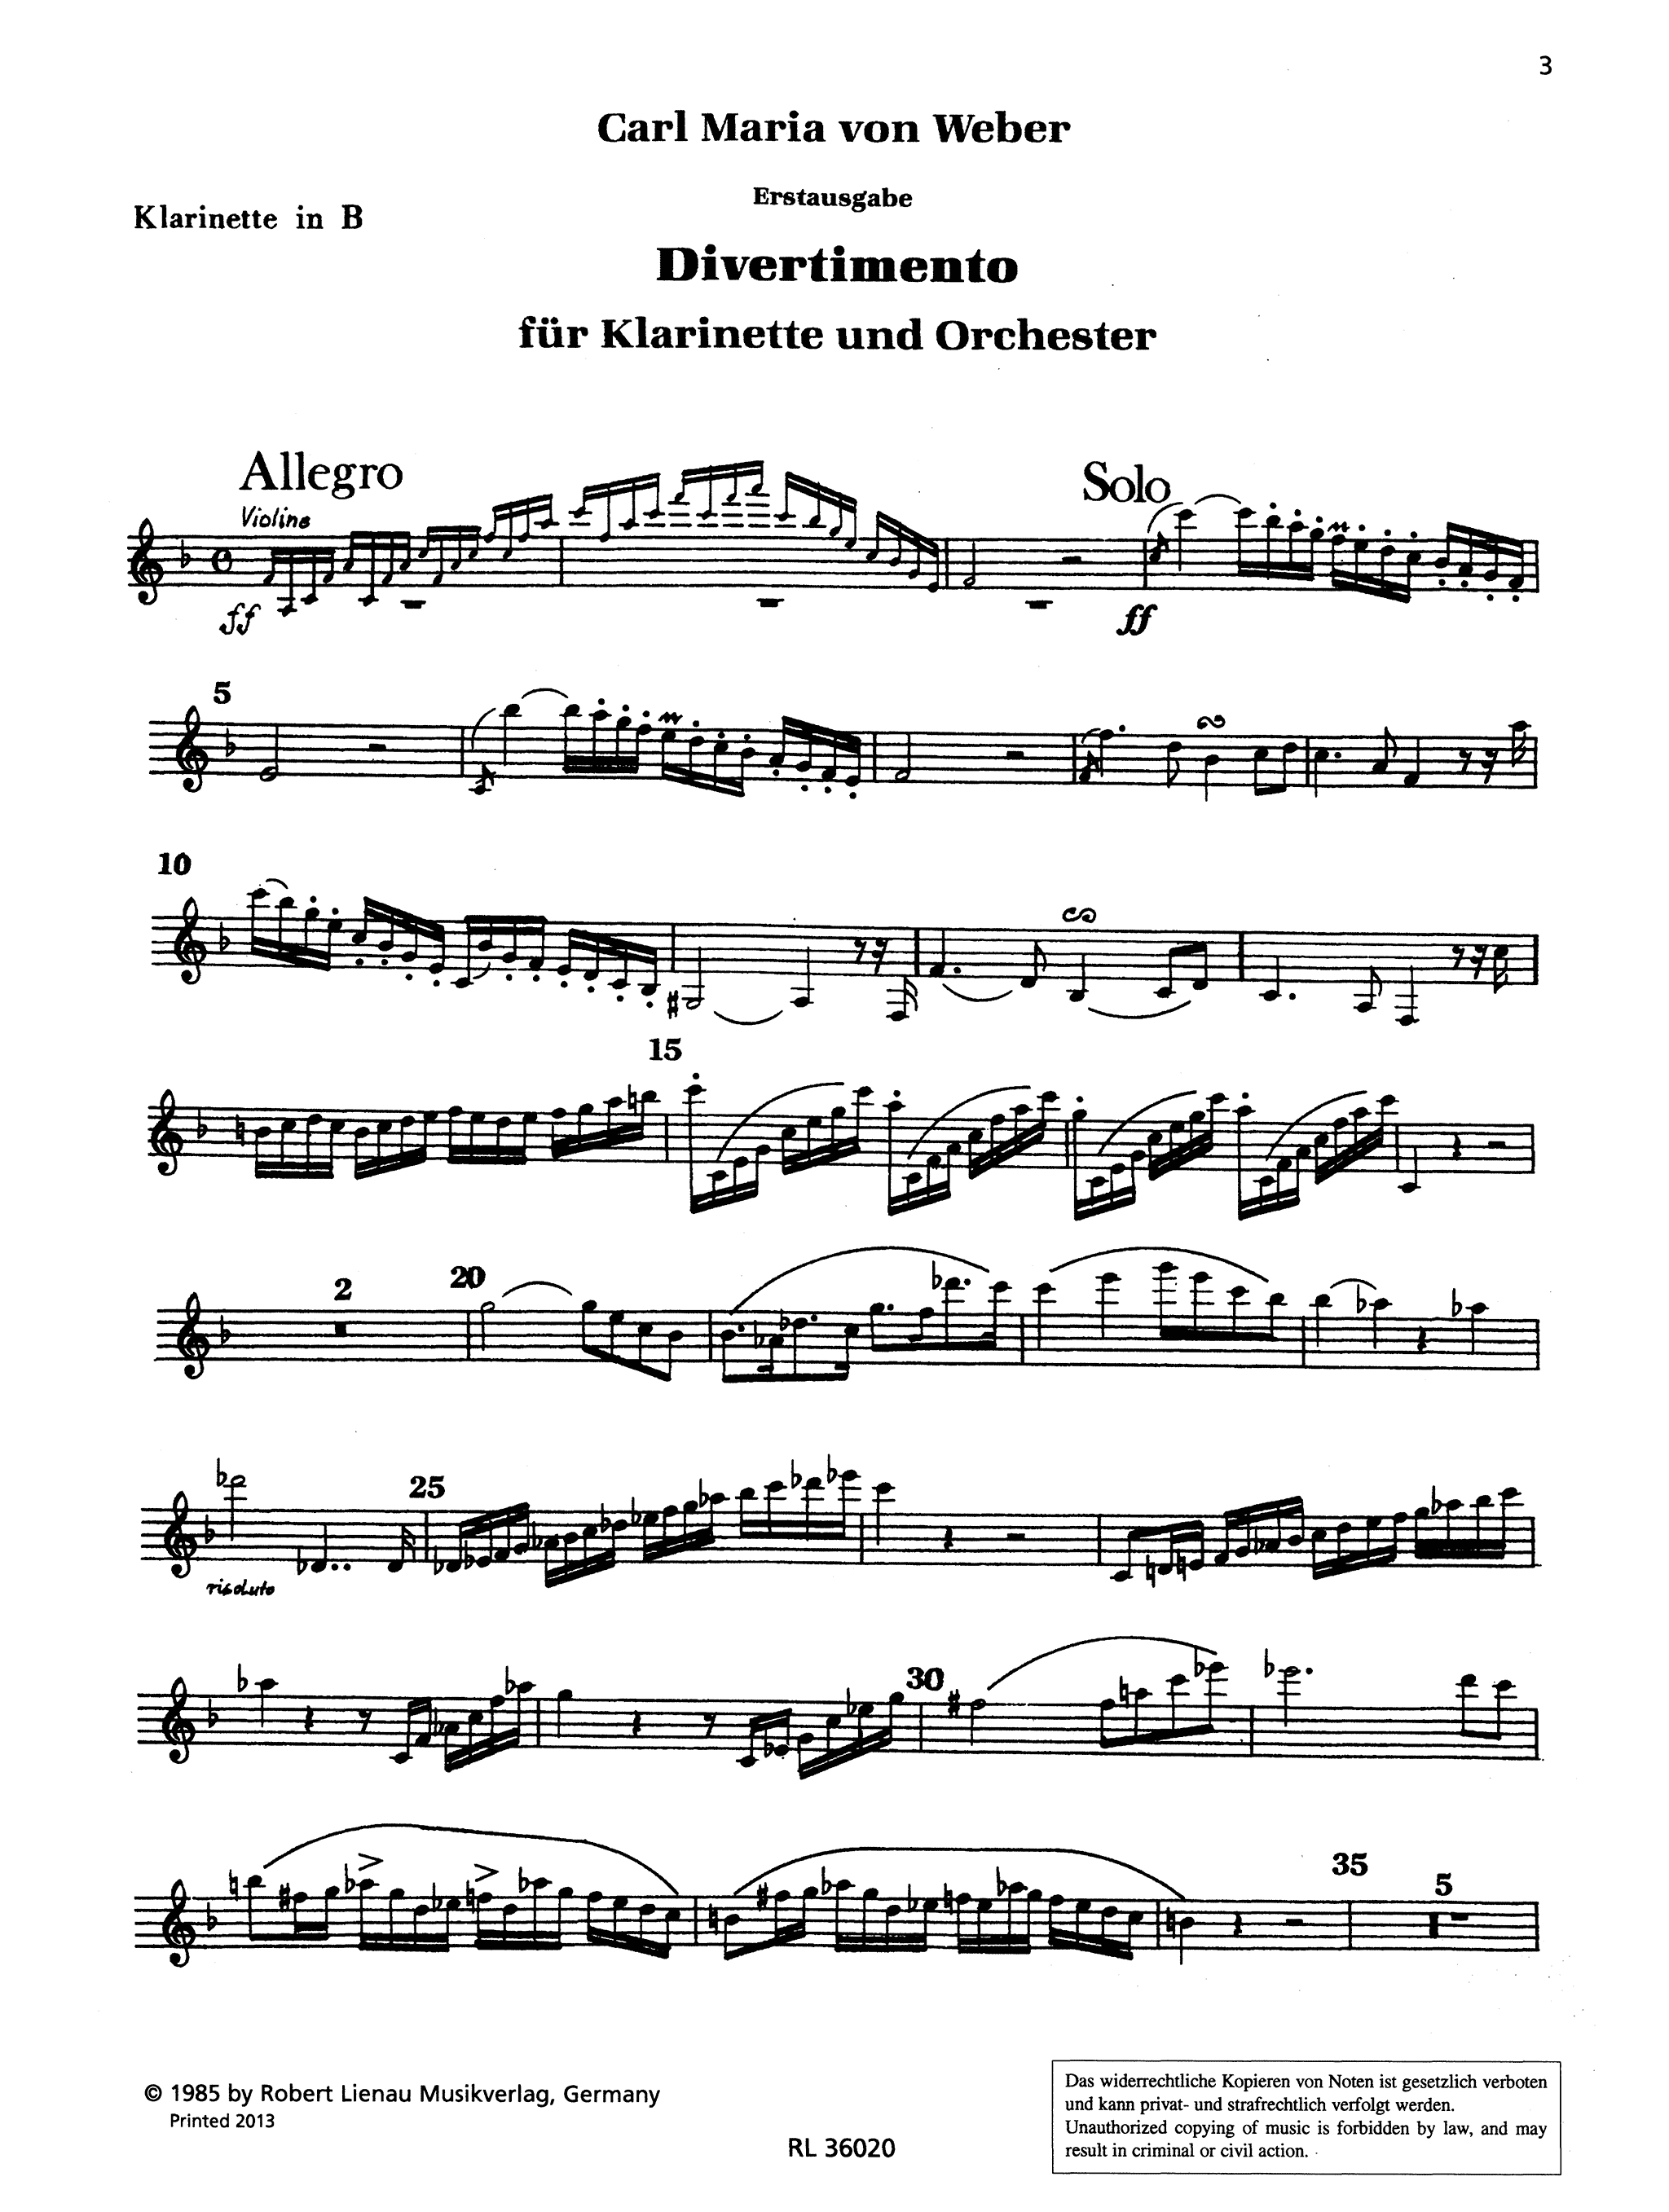 Weber Divertimento in E-flat Major clarinet part